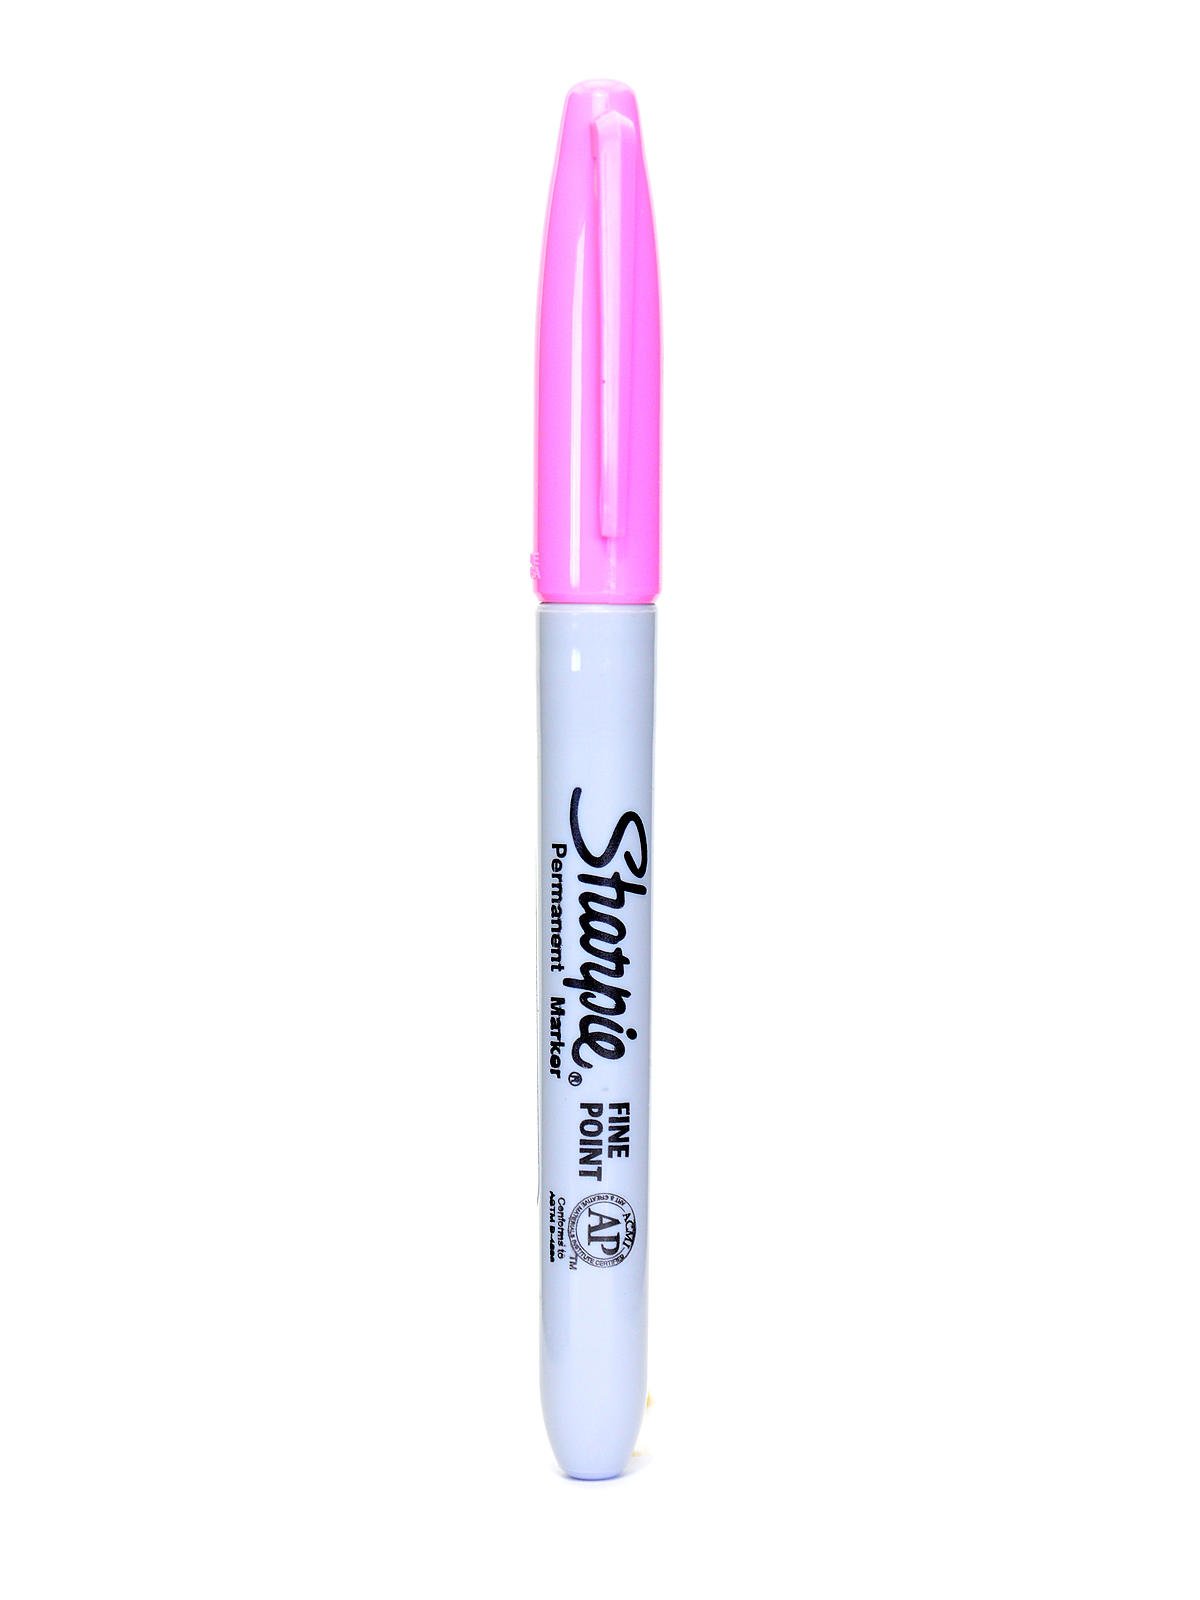 Sharpie Fine Point Permanent Marker - Electric Pink